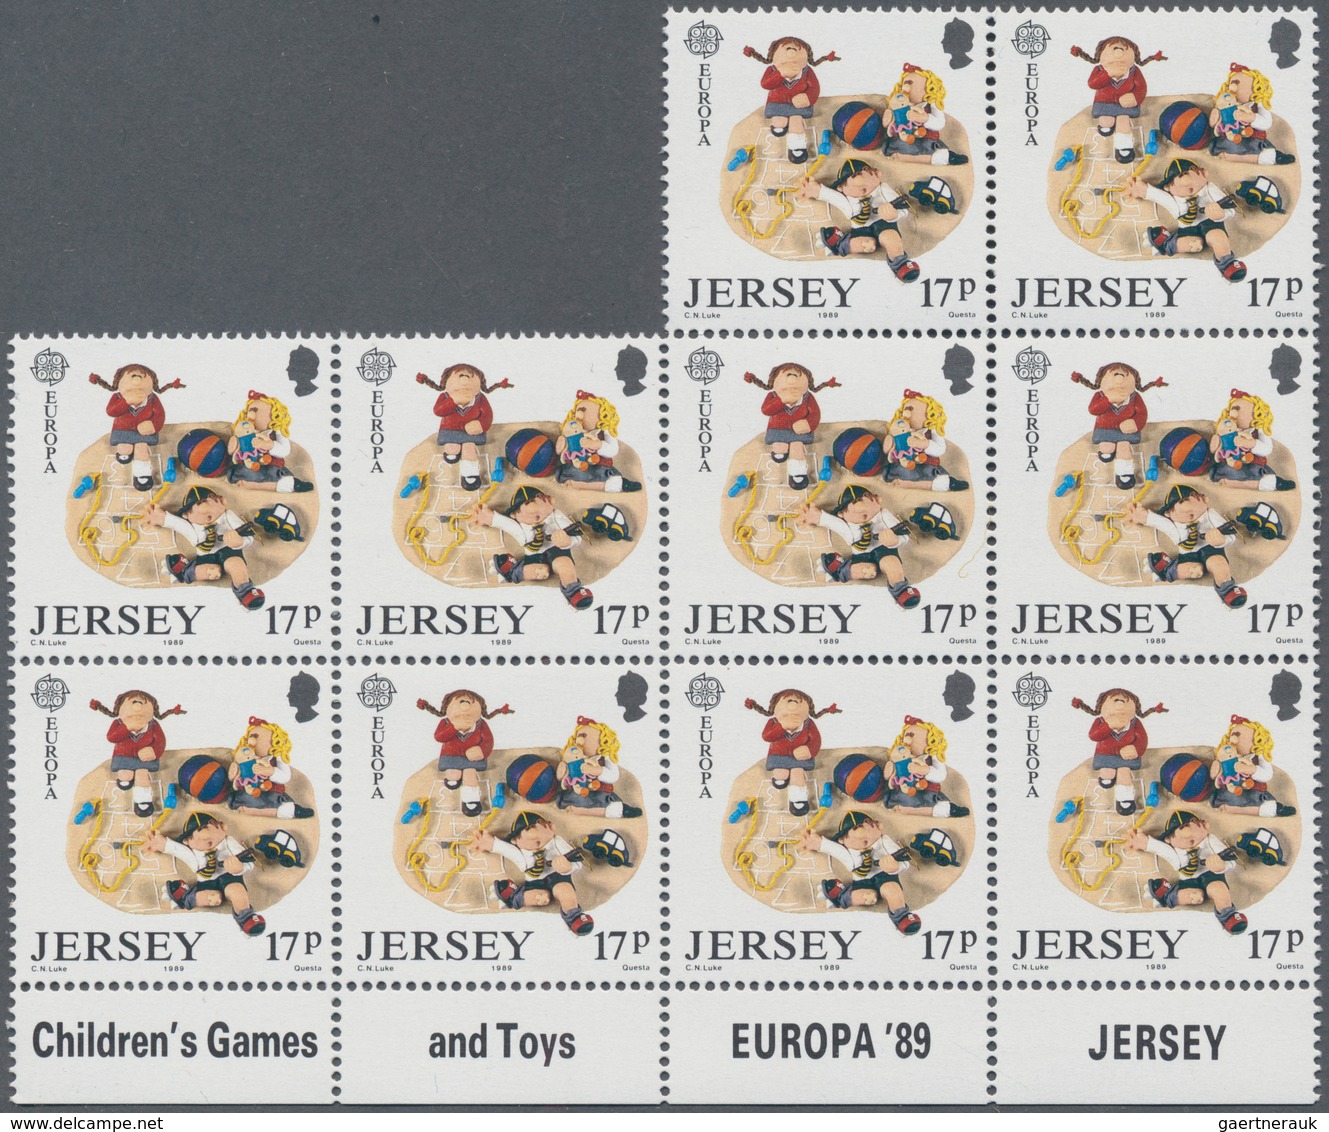 Großbritannien - Kanalinseln: 1978/1997 (ca.), accumulation of Jersey, Guernsey and Isle of Man with